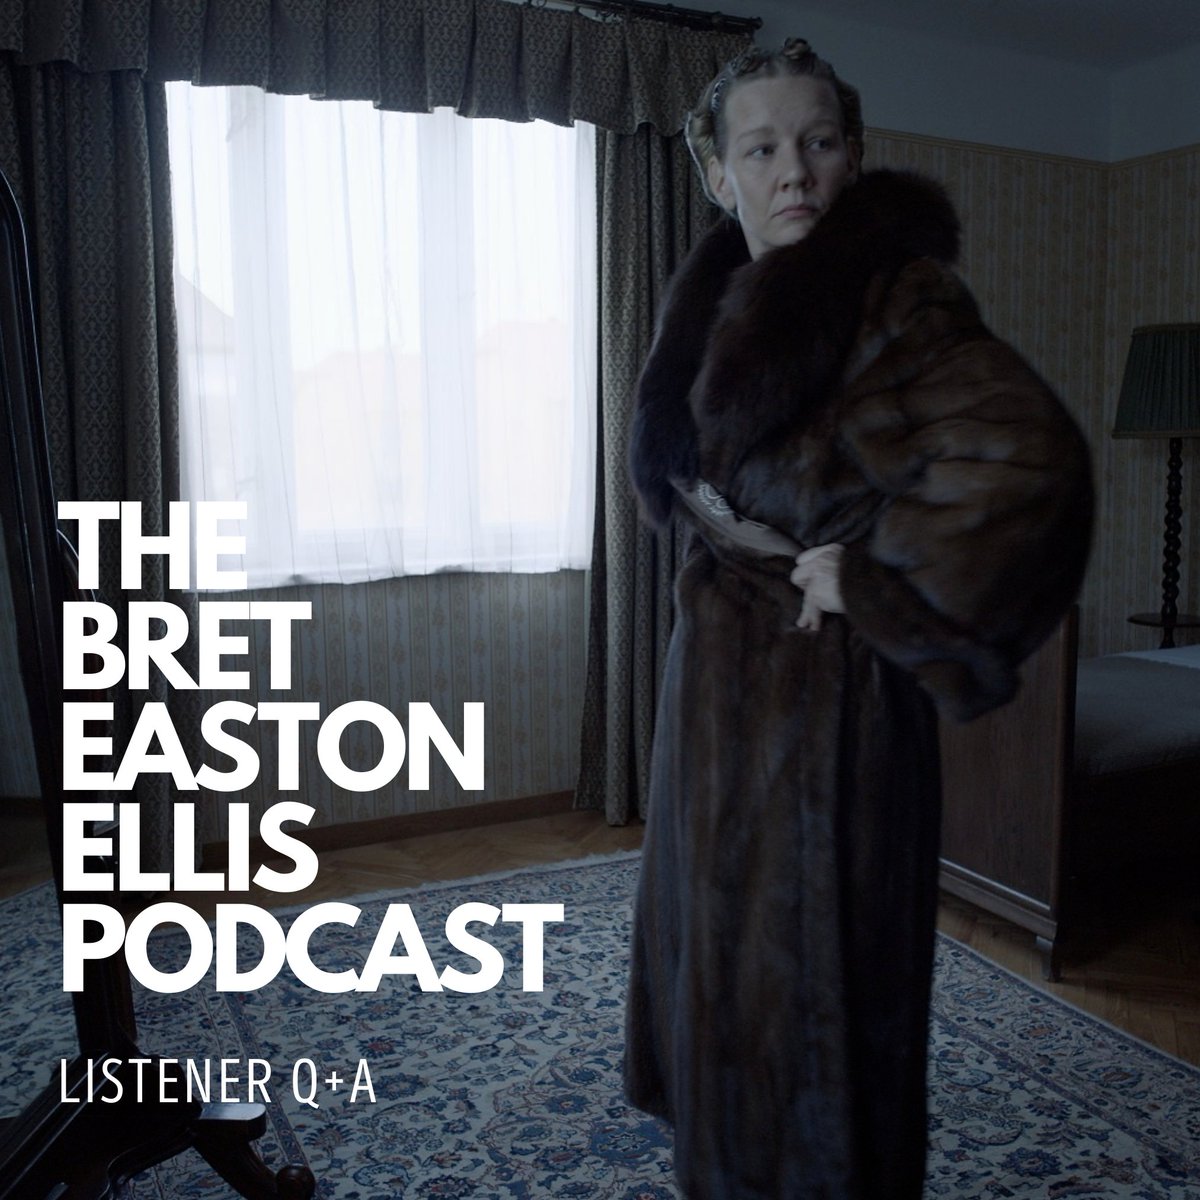 The Bret Easton Ellis Podcast - Season 8, Episode 4 - Listener Q+A. Bit.ly/bees8e4